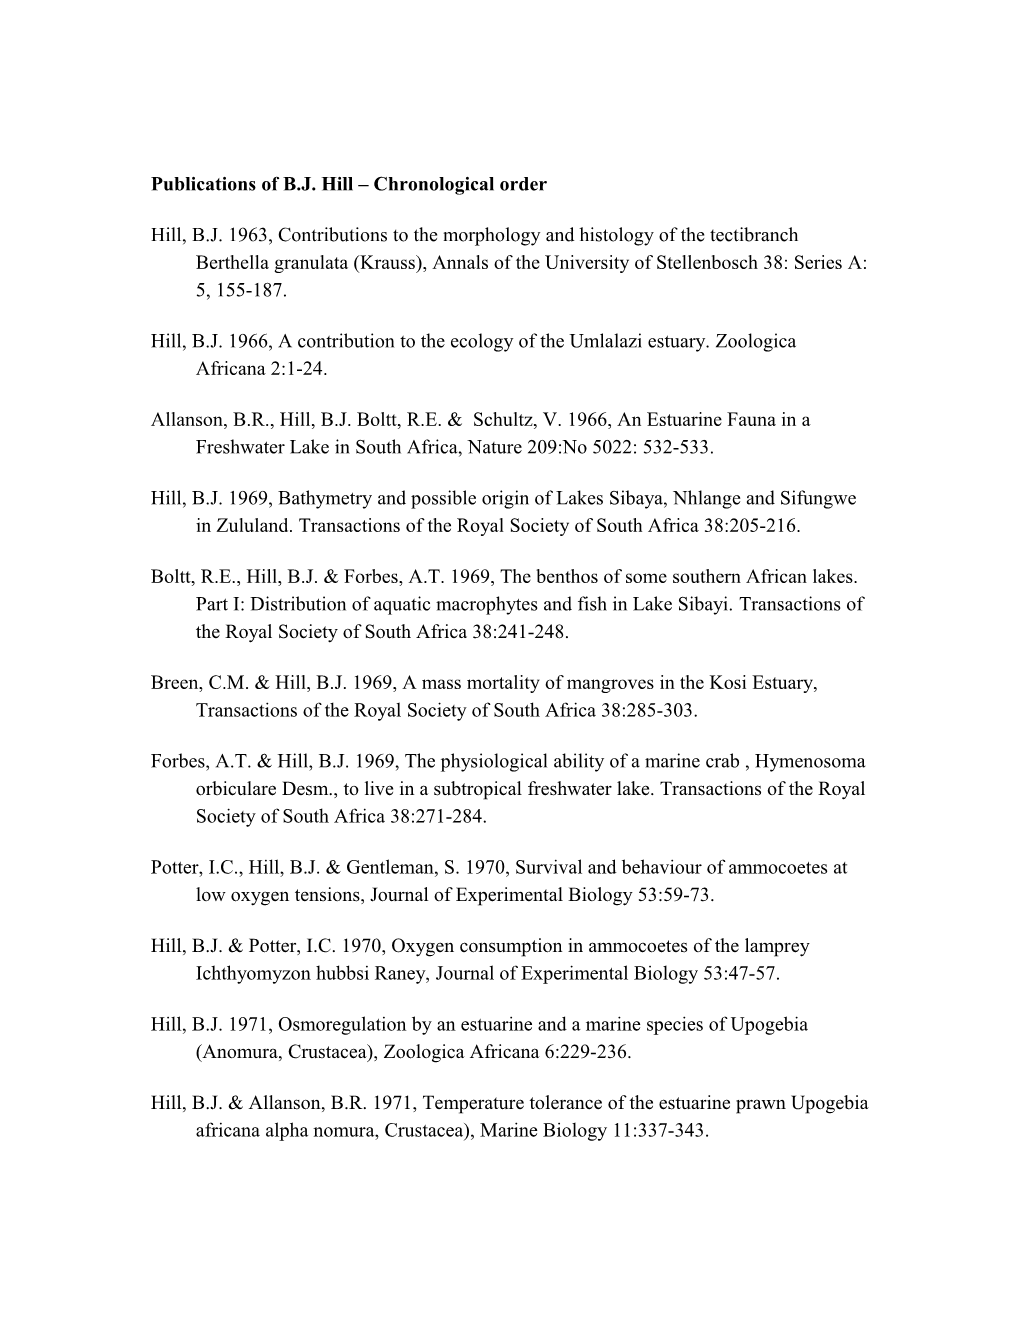 Publications of B.J. Hill Chronological Order